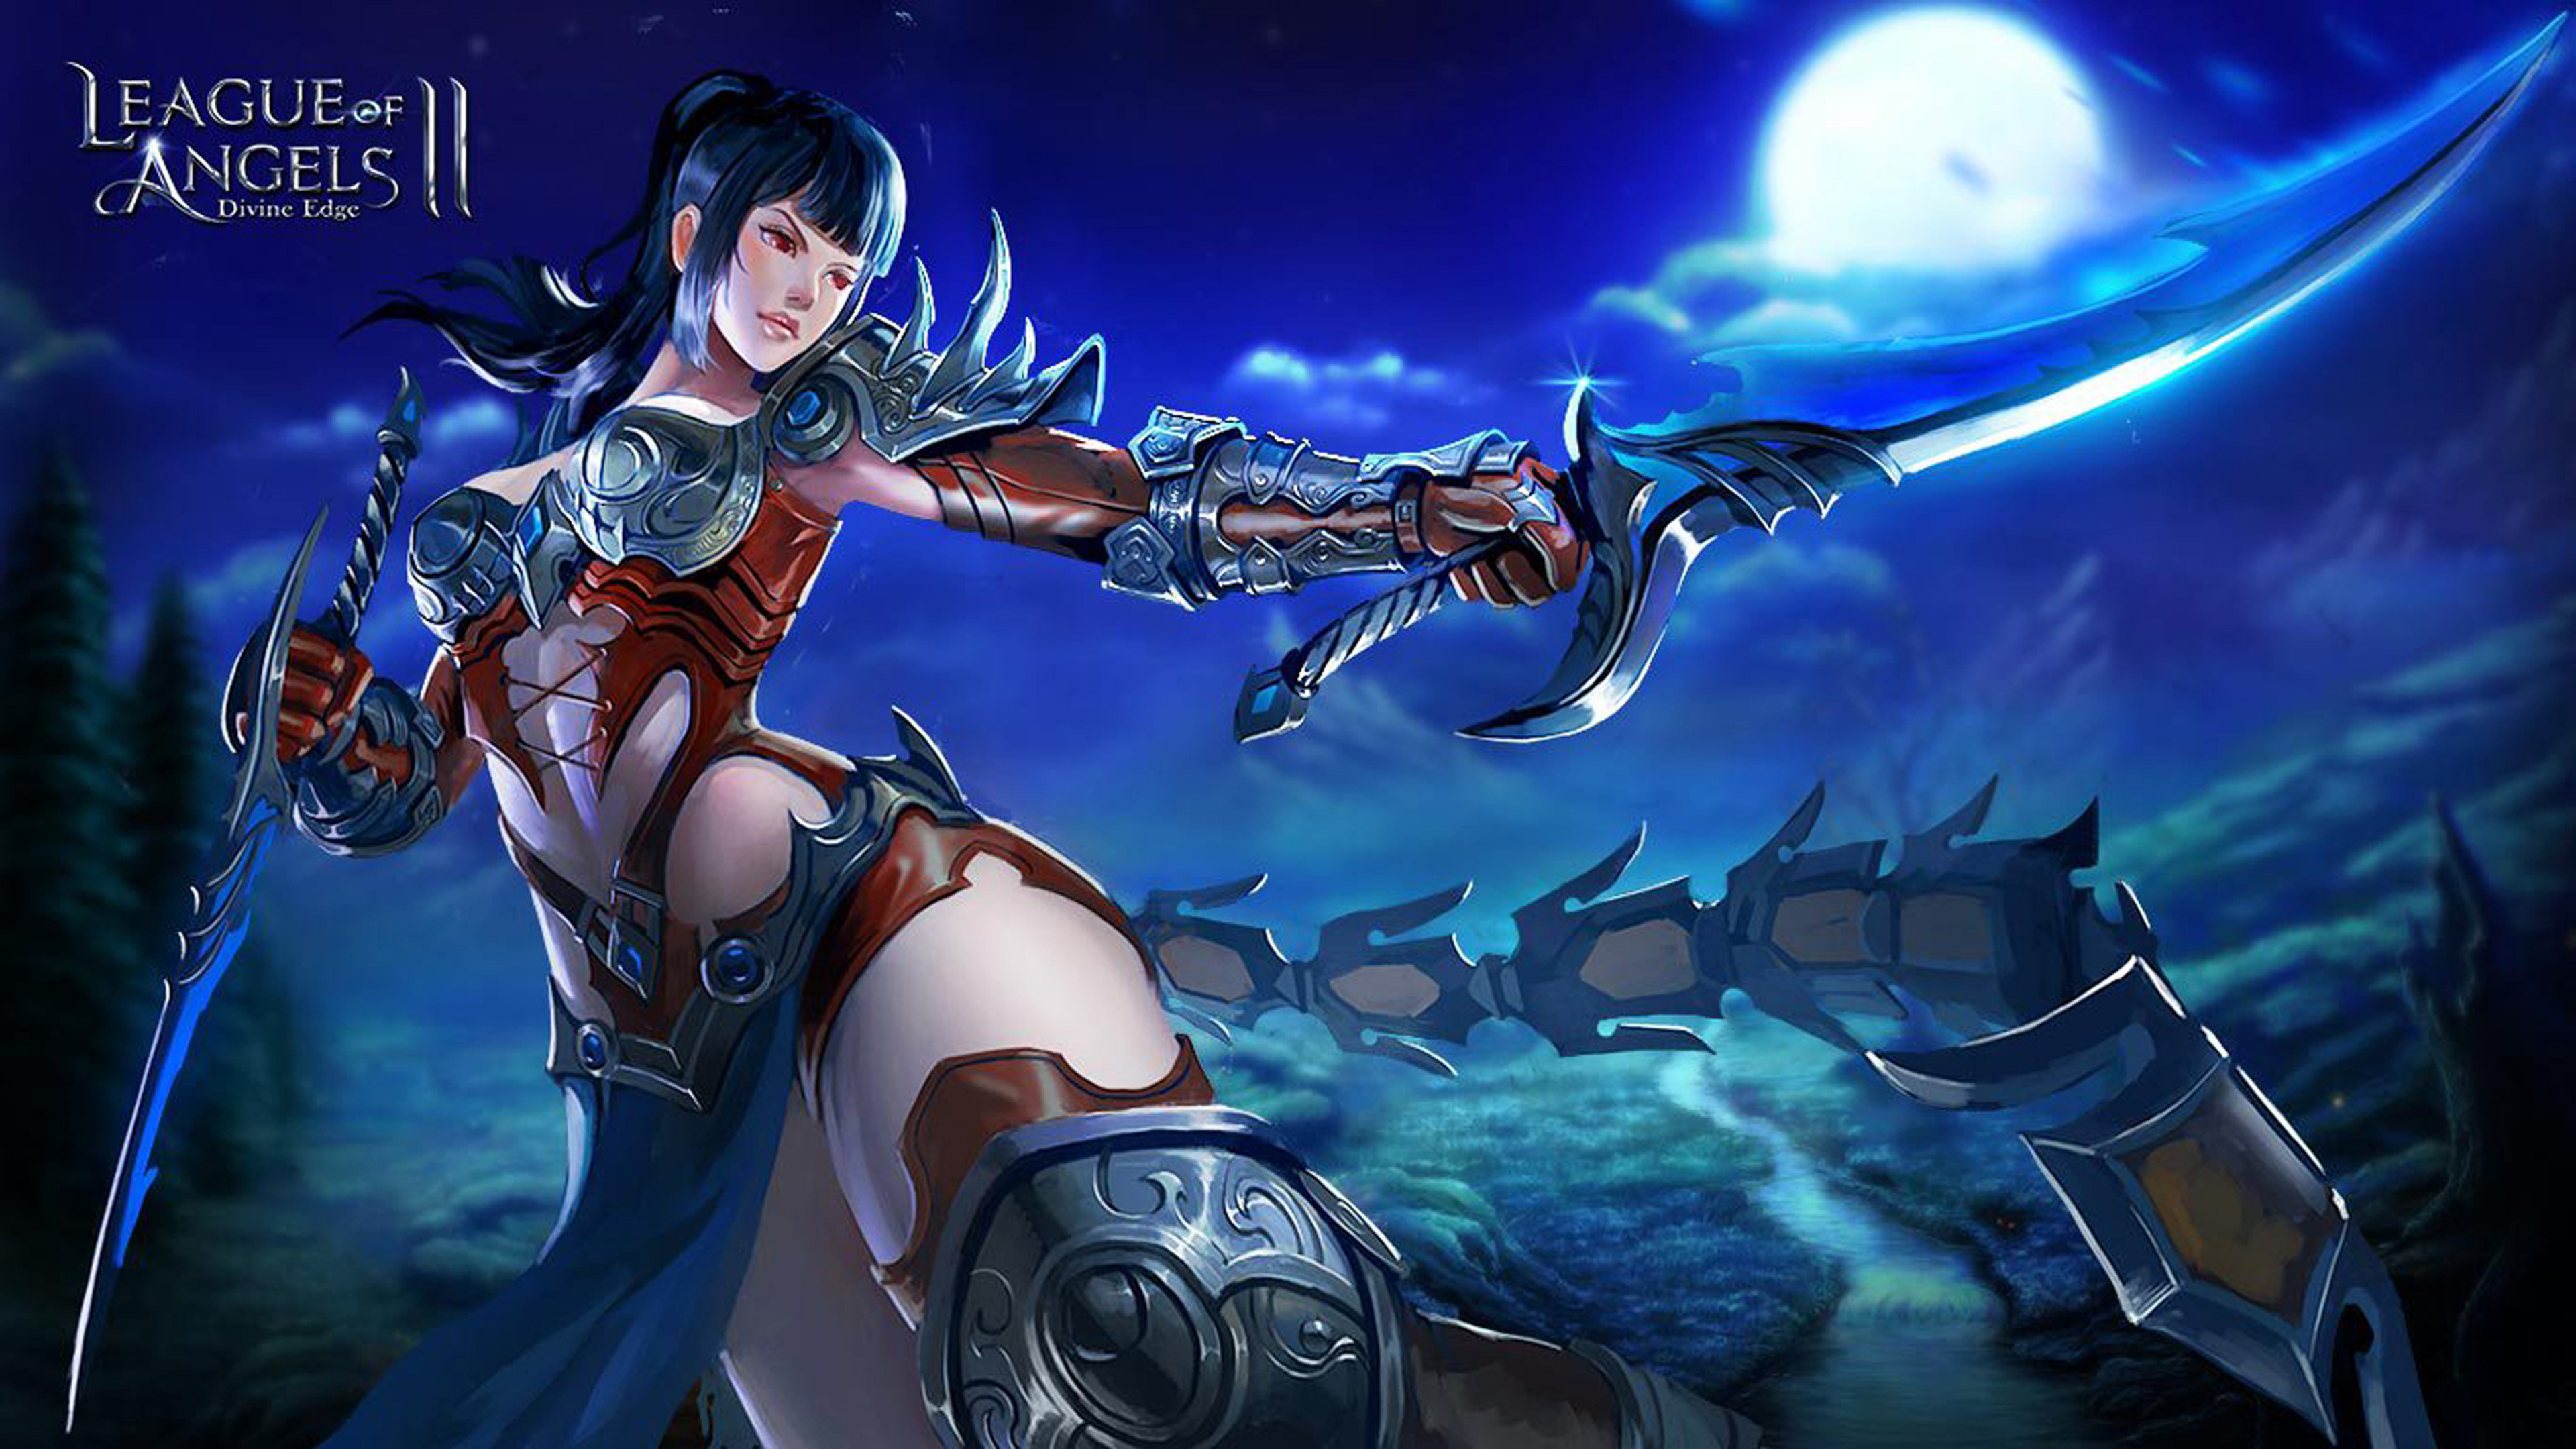 Lin Shadow Blade, Beautiful girl, Martial swordsman, League of Angels, 3840x2160 4K Desktop